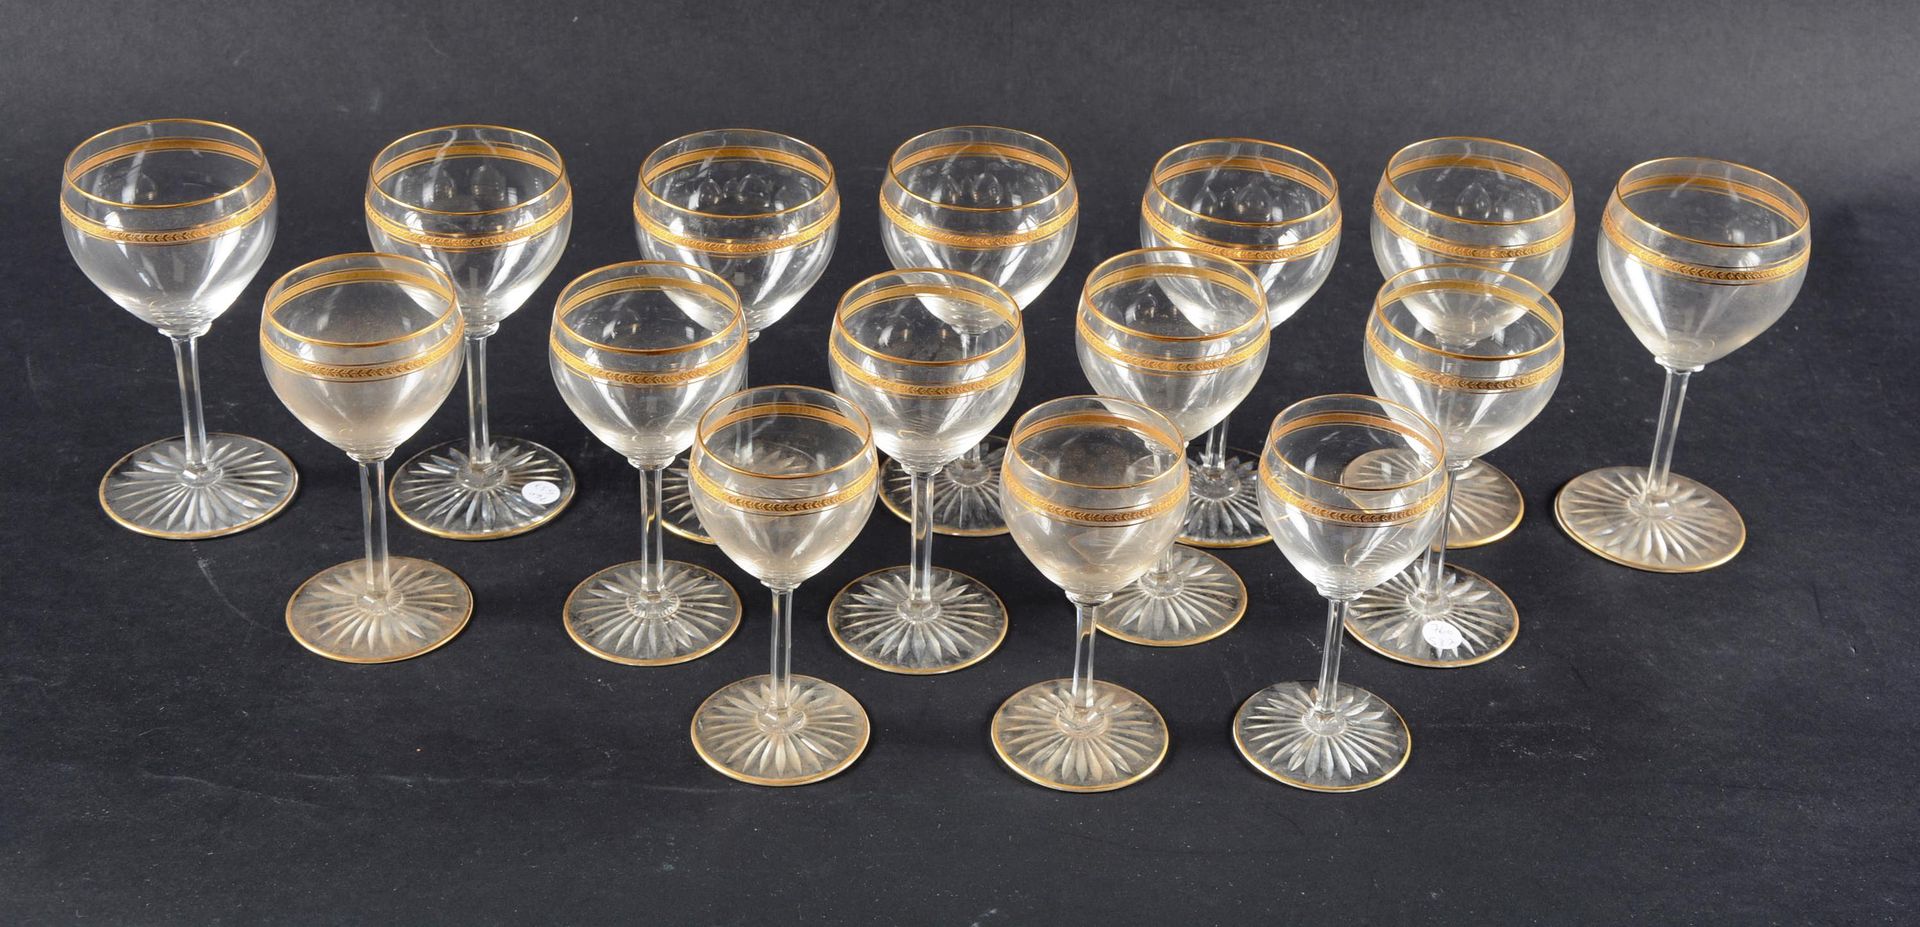 Suite de verres Suite di bicchieri di cristallo antichi con doratura, 7 bicchier&hellip;